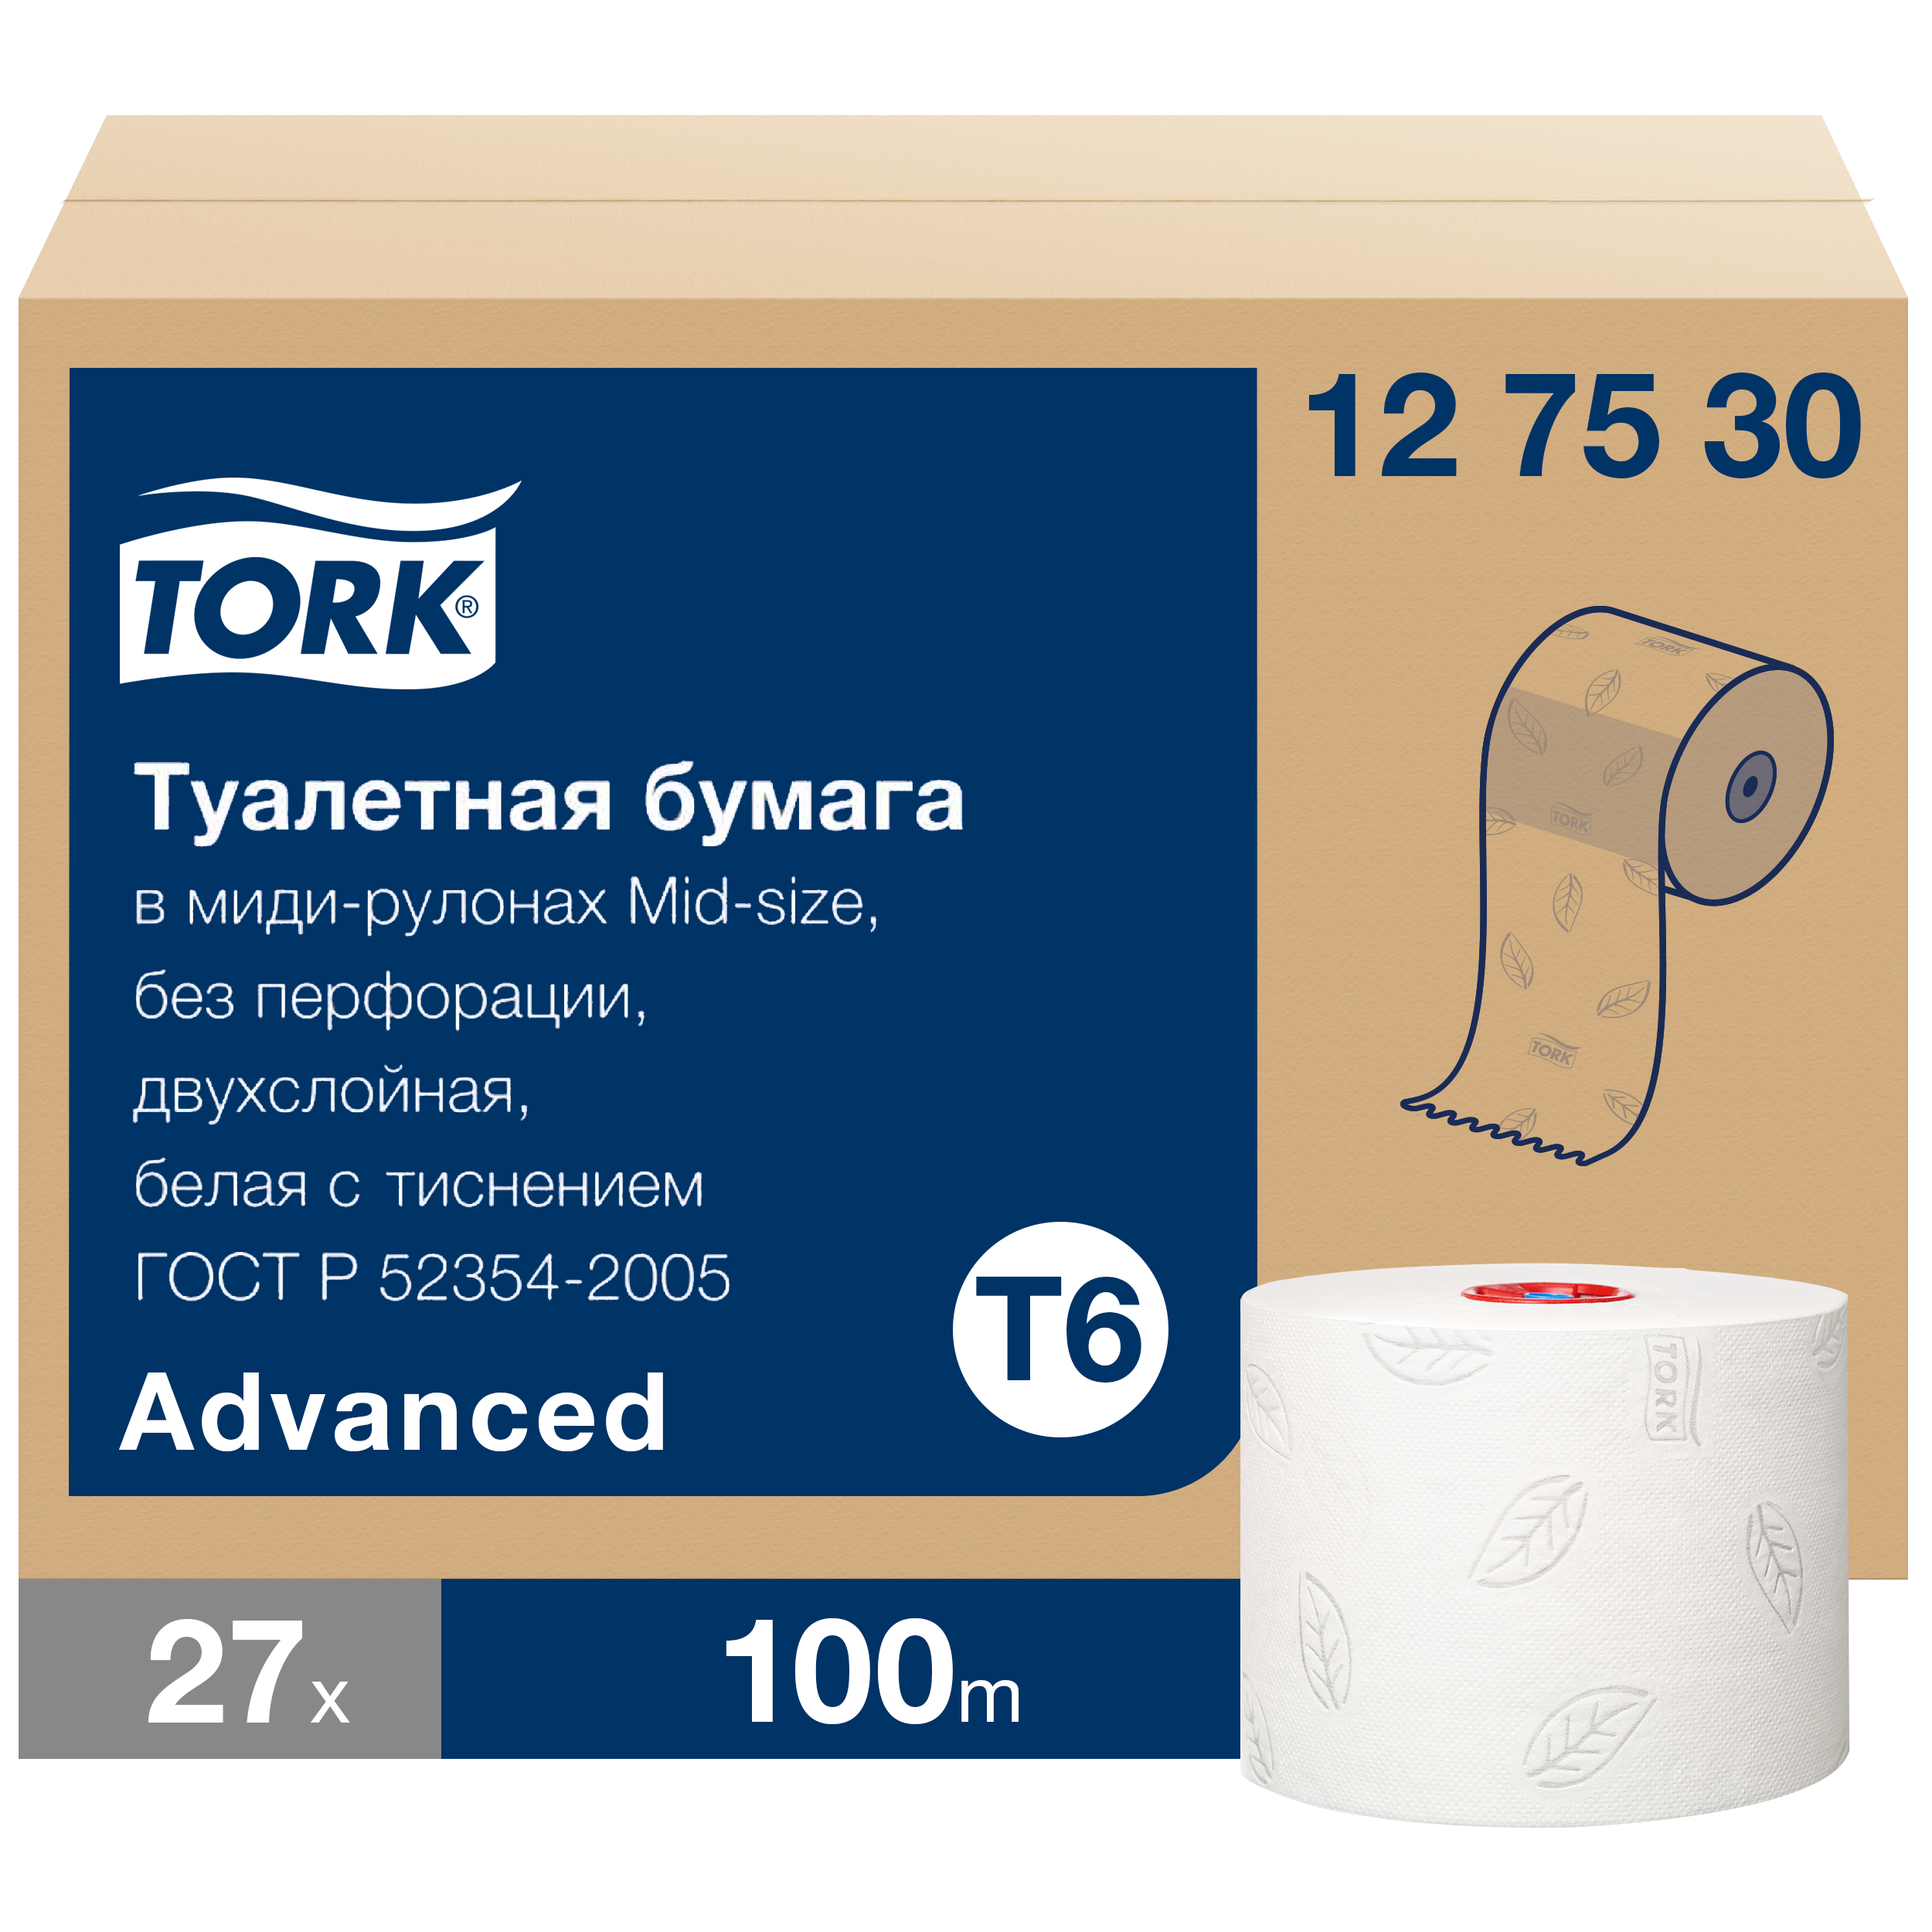 Бумага туалетная Tork Mid-size Advanced в рулонах, T6, 2 слоя, 100м, 27 рулонов бумага туалетная tork premium в рулонах т6 2слоя 90м 27 рулонов